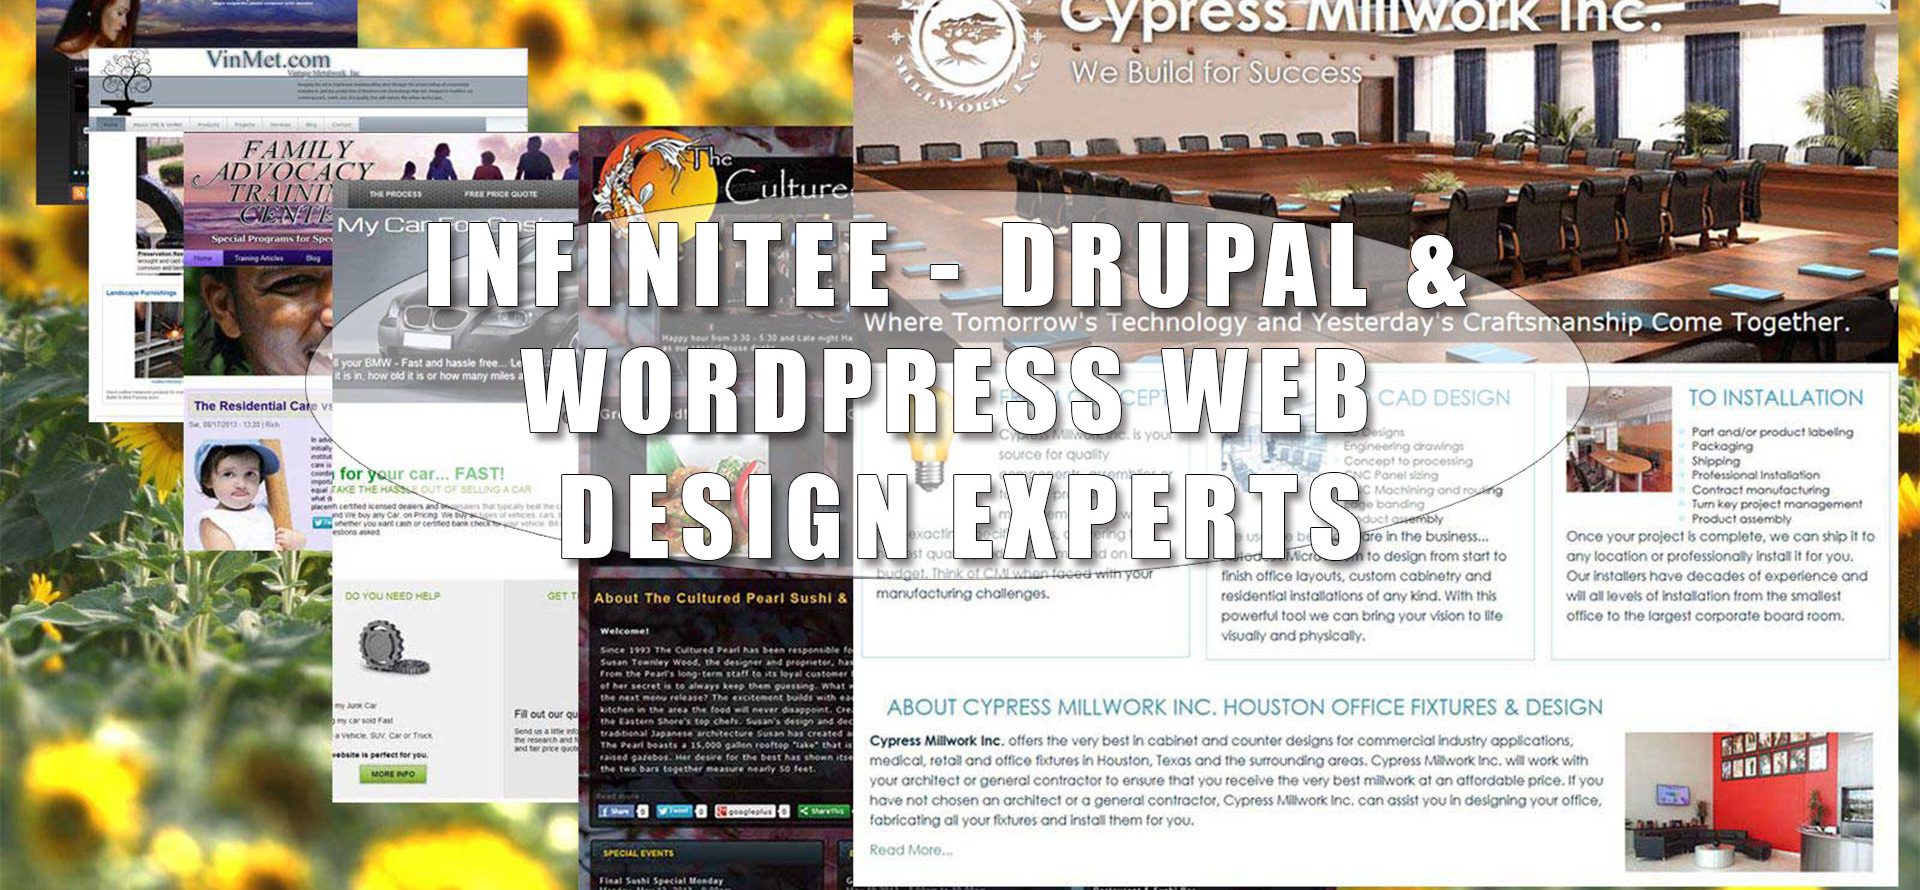 Delaware Web Design - Showcase of Drupal CMS Web Design, WordPress and Static HTML Websites.